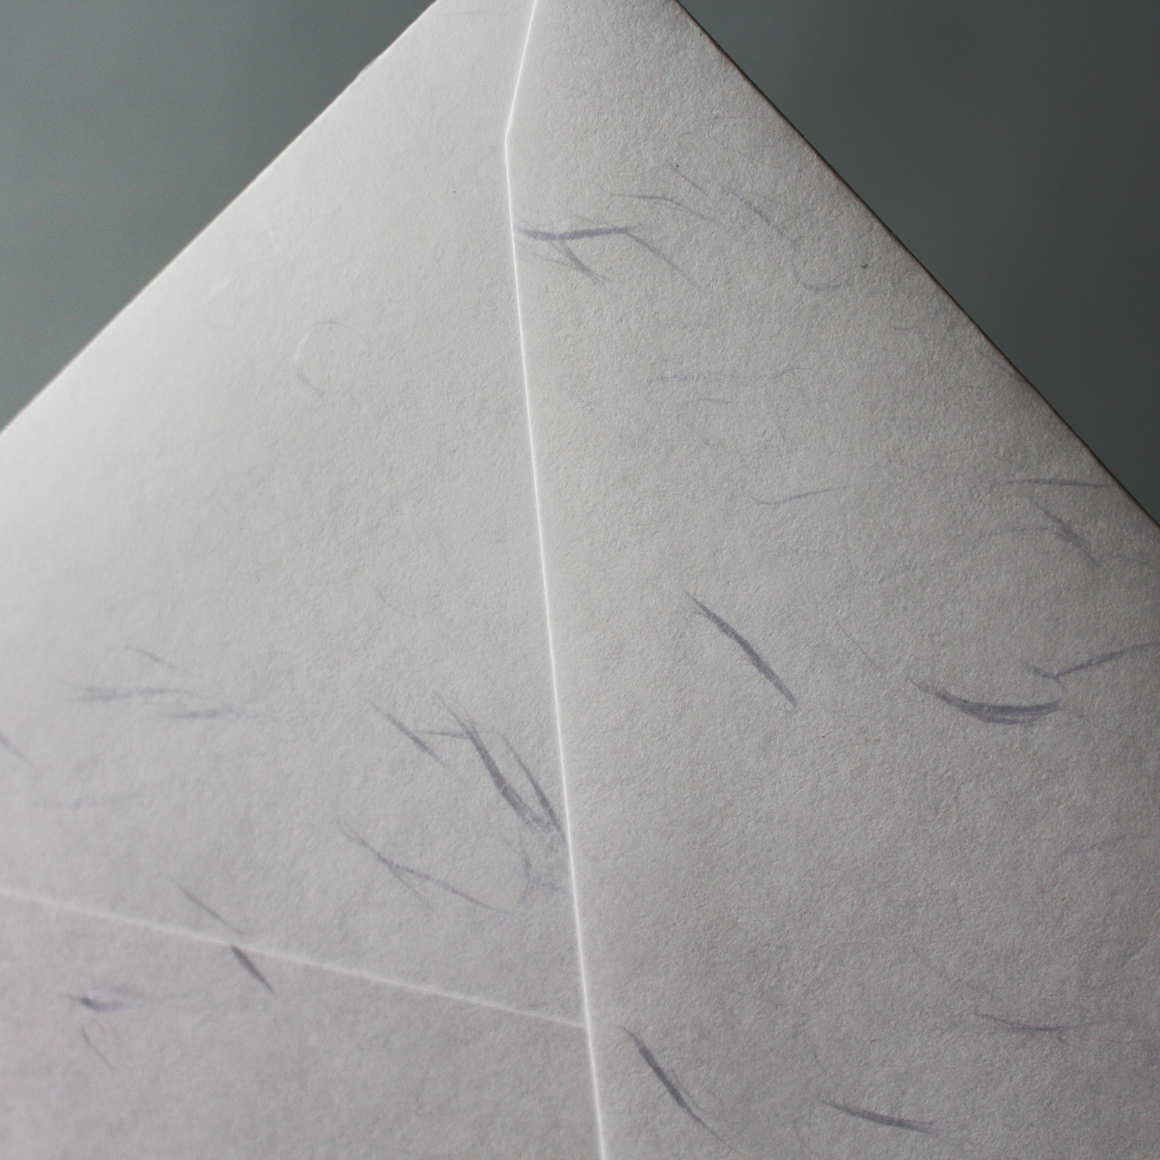 Envelope封筒(和)